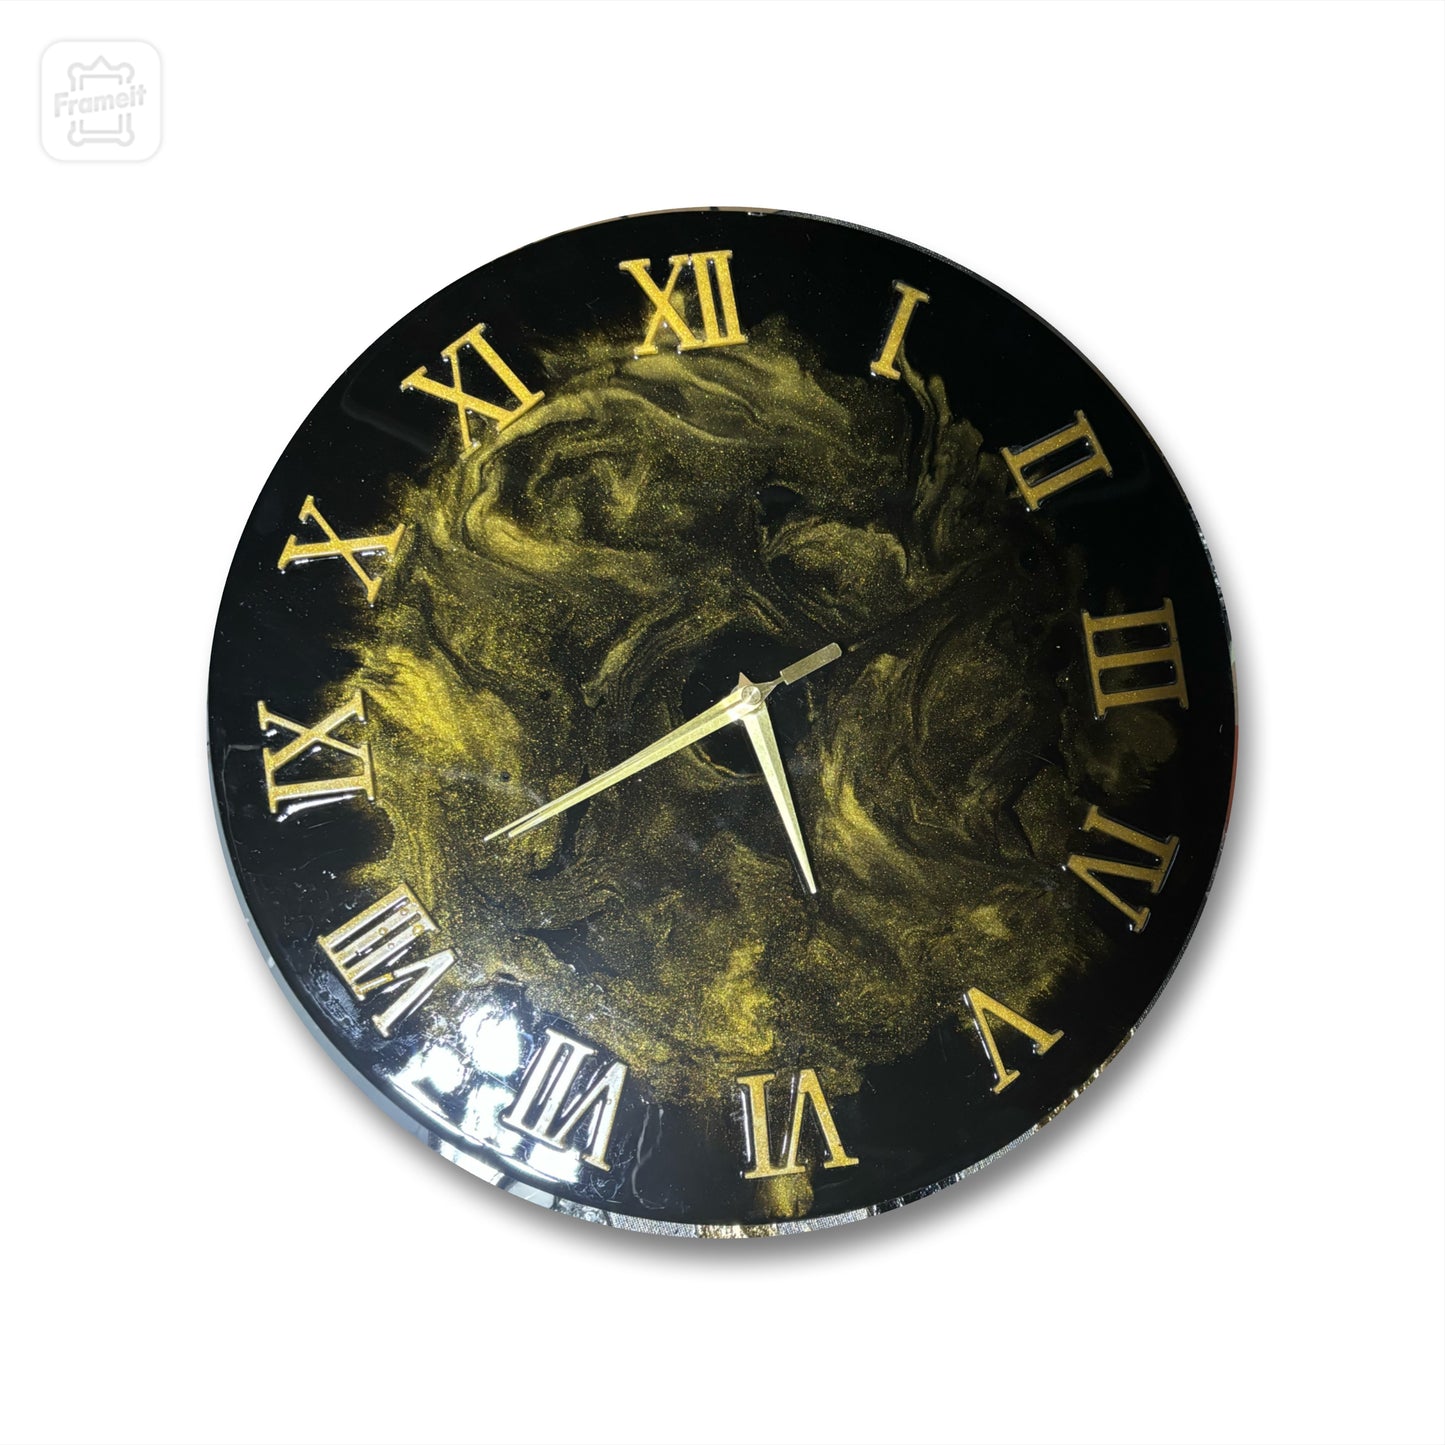 14' solid epoxy clock